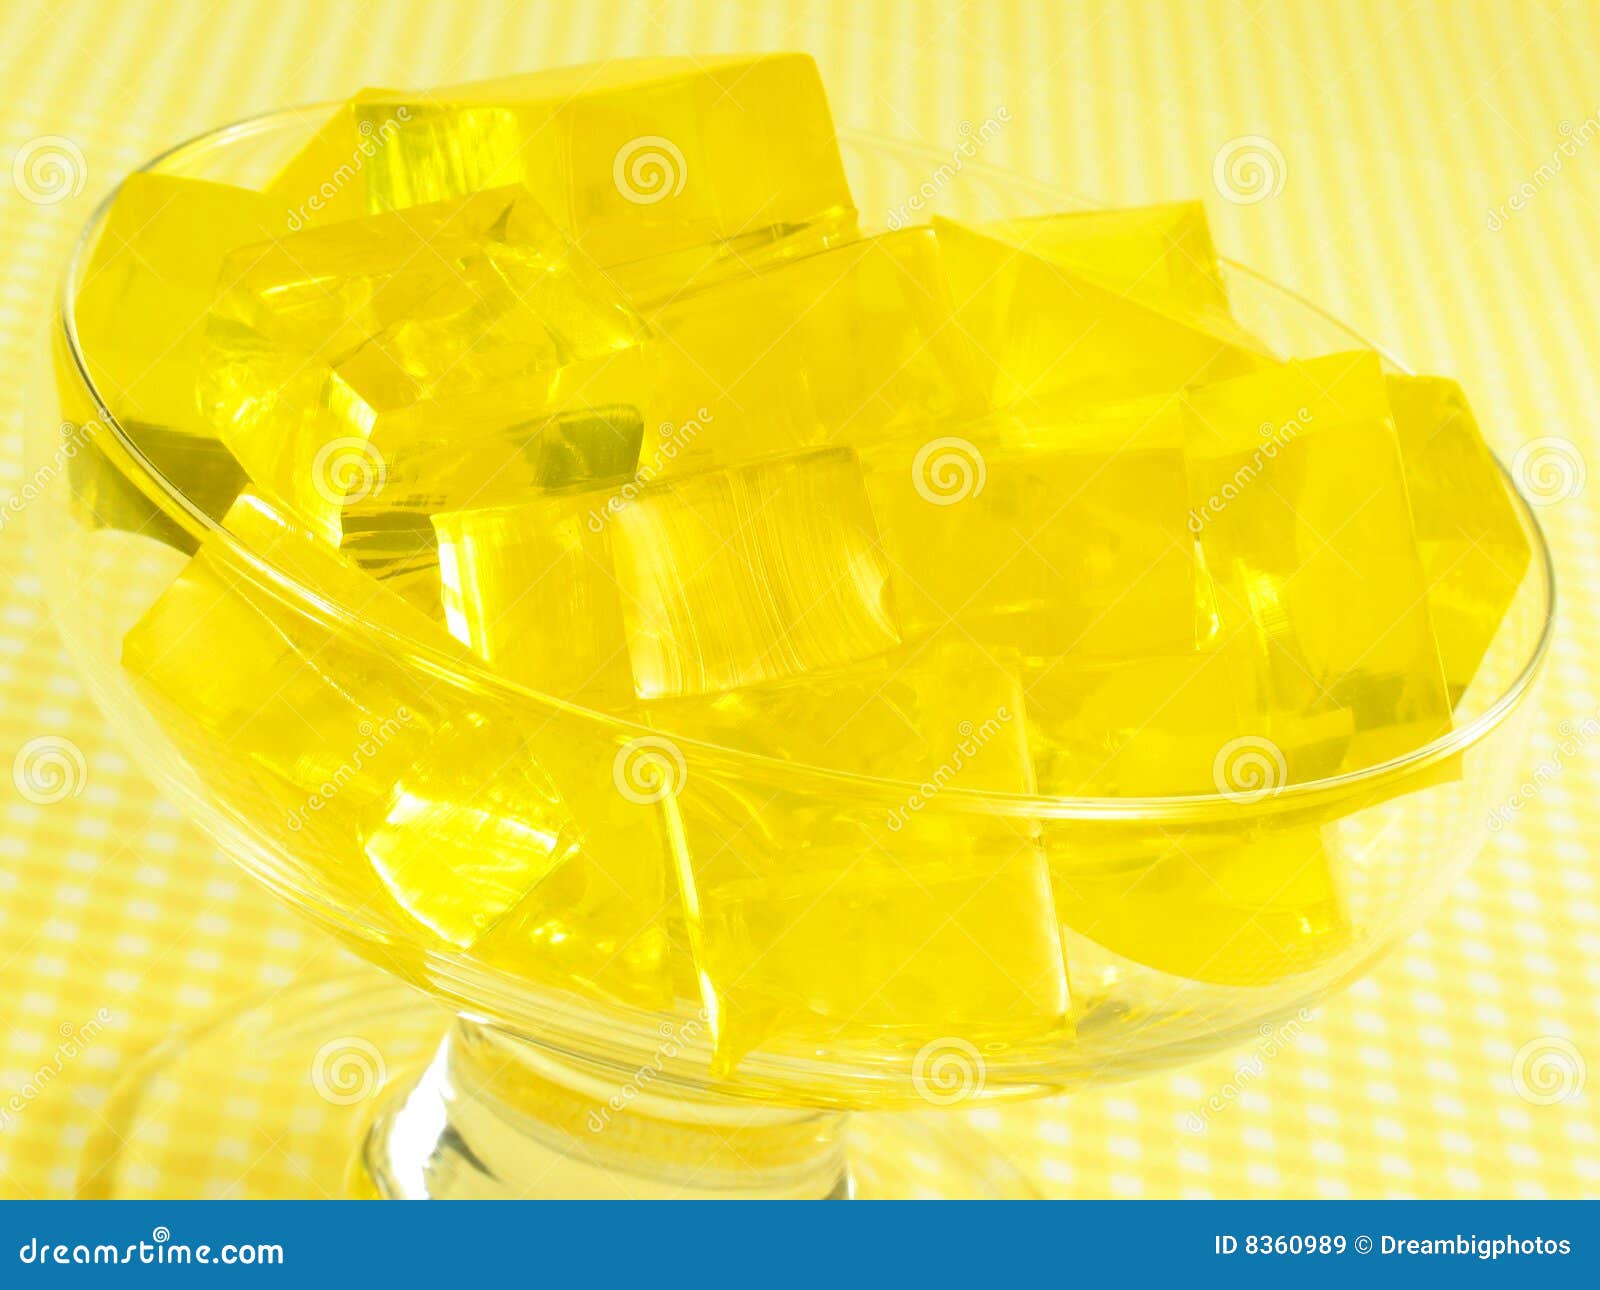 yellow gelatin